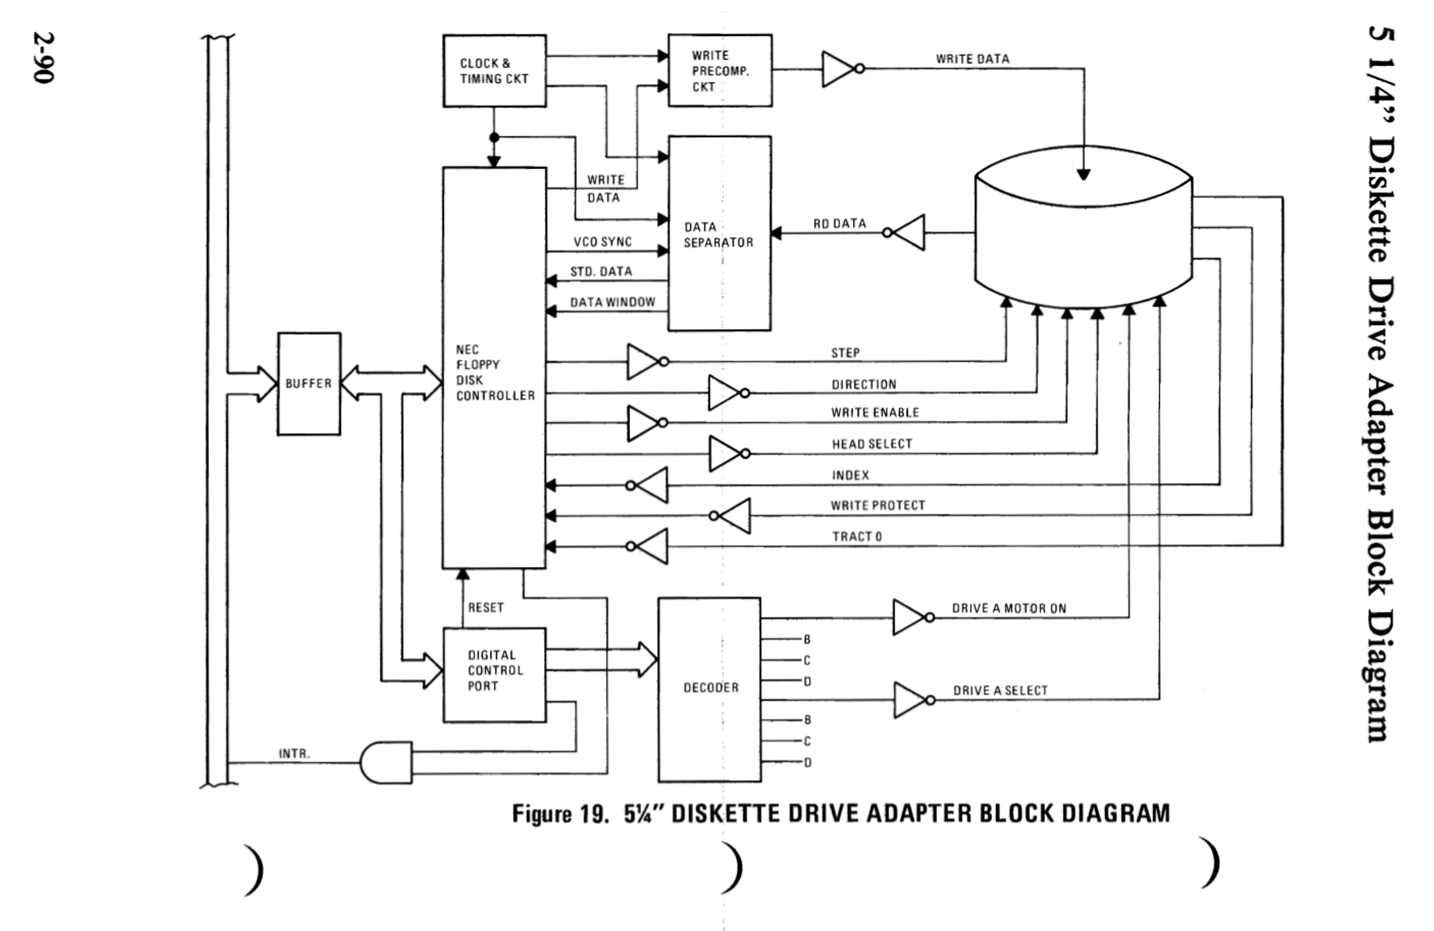 Floppy drive block diagram